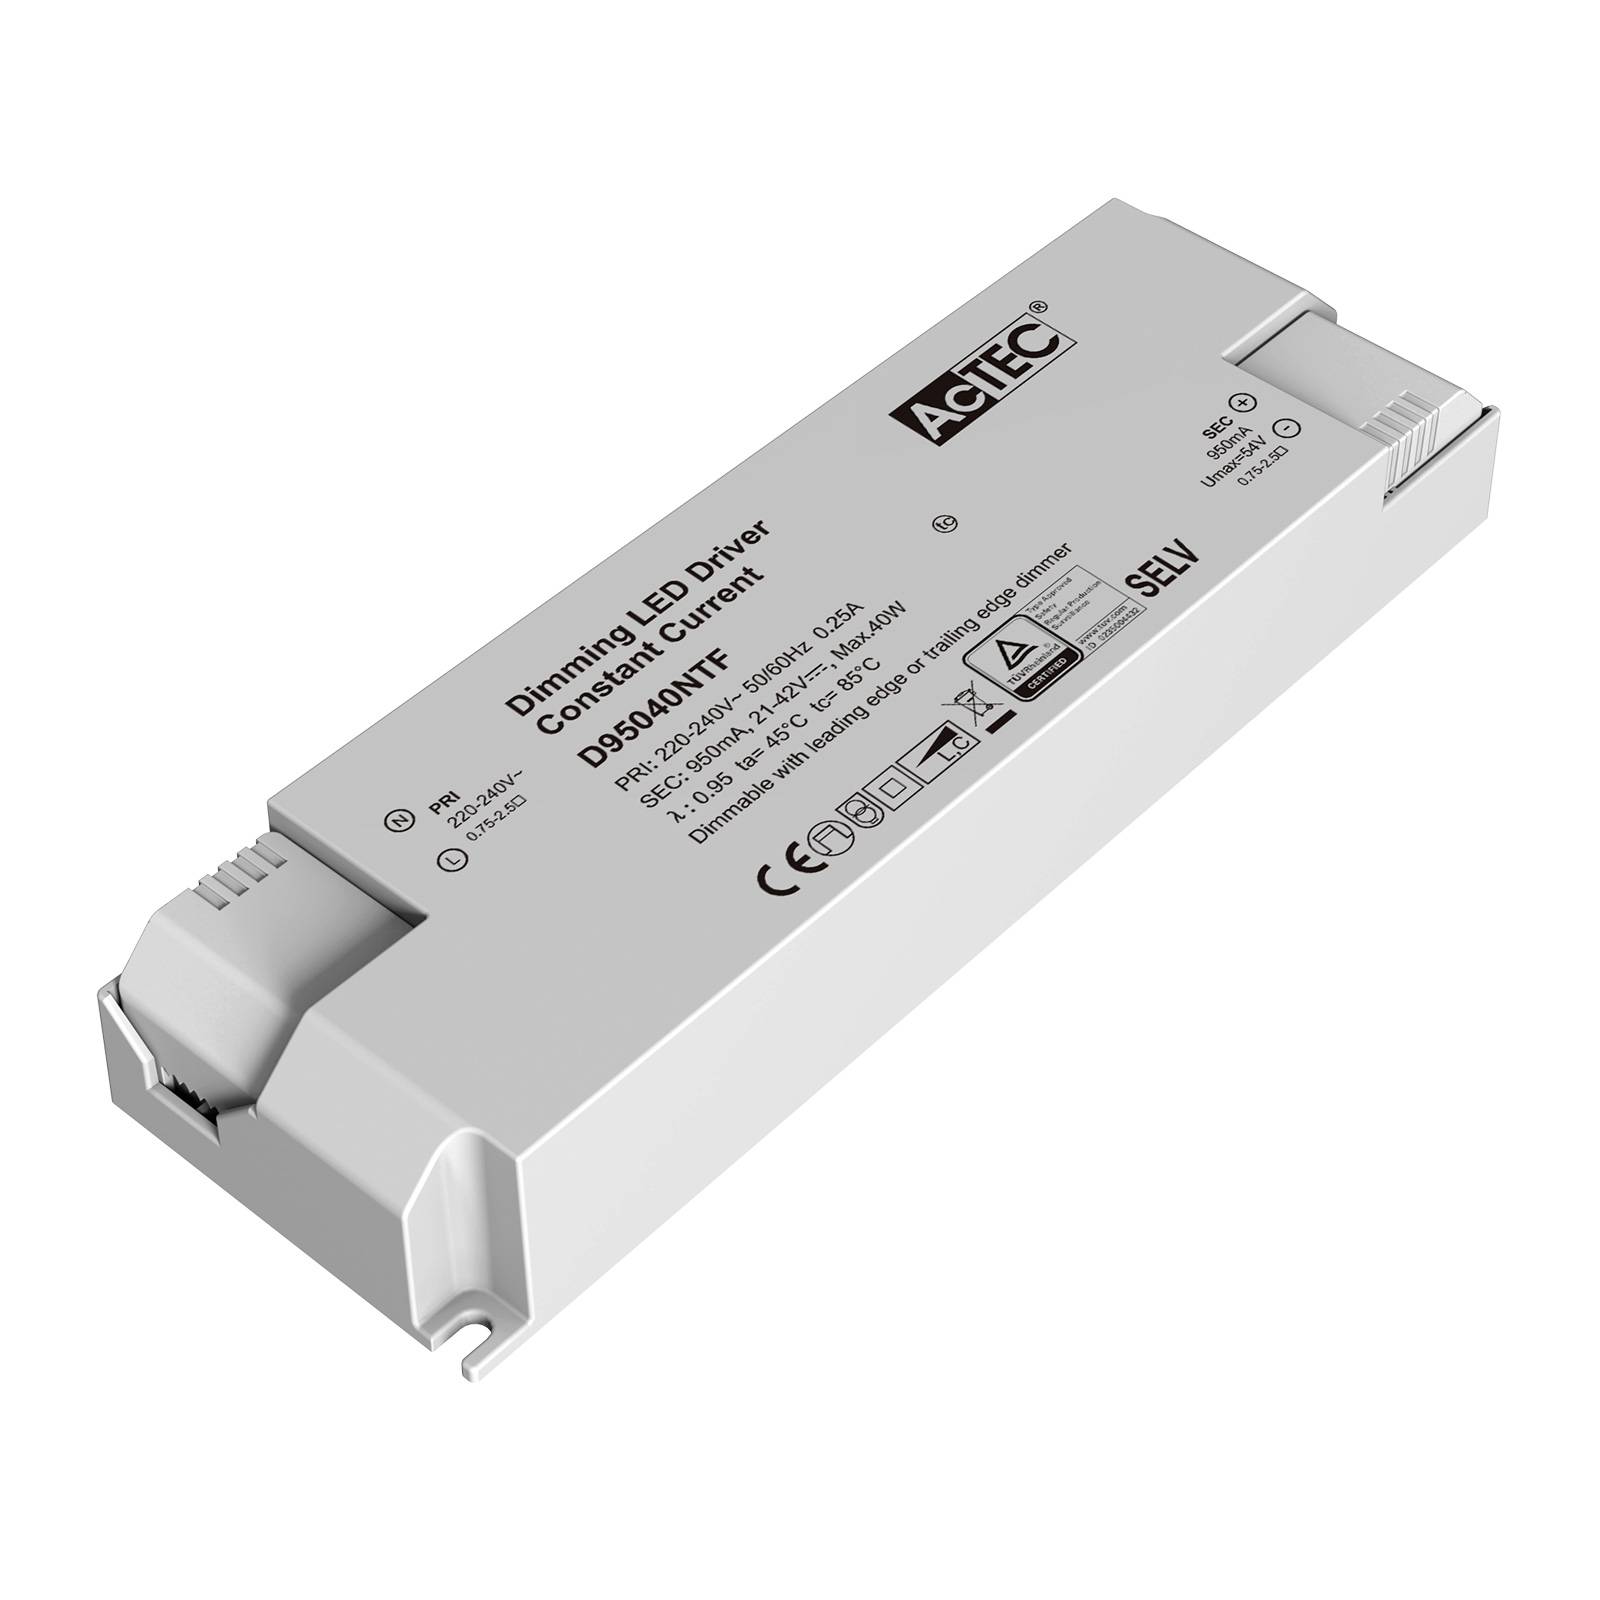 AcTEC Triac LED-Treiber CC max. 40W 950mA